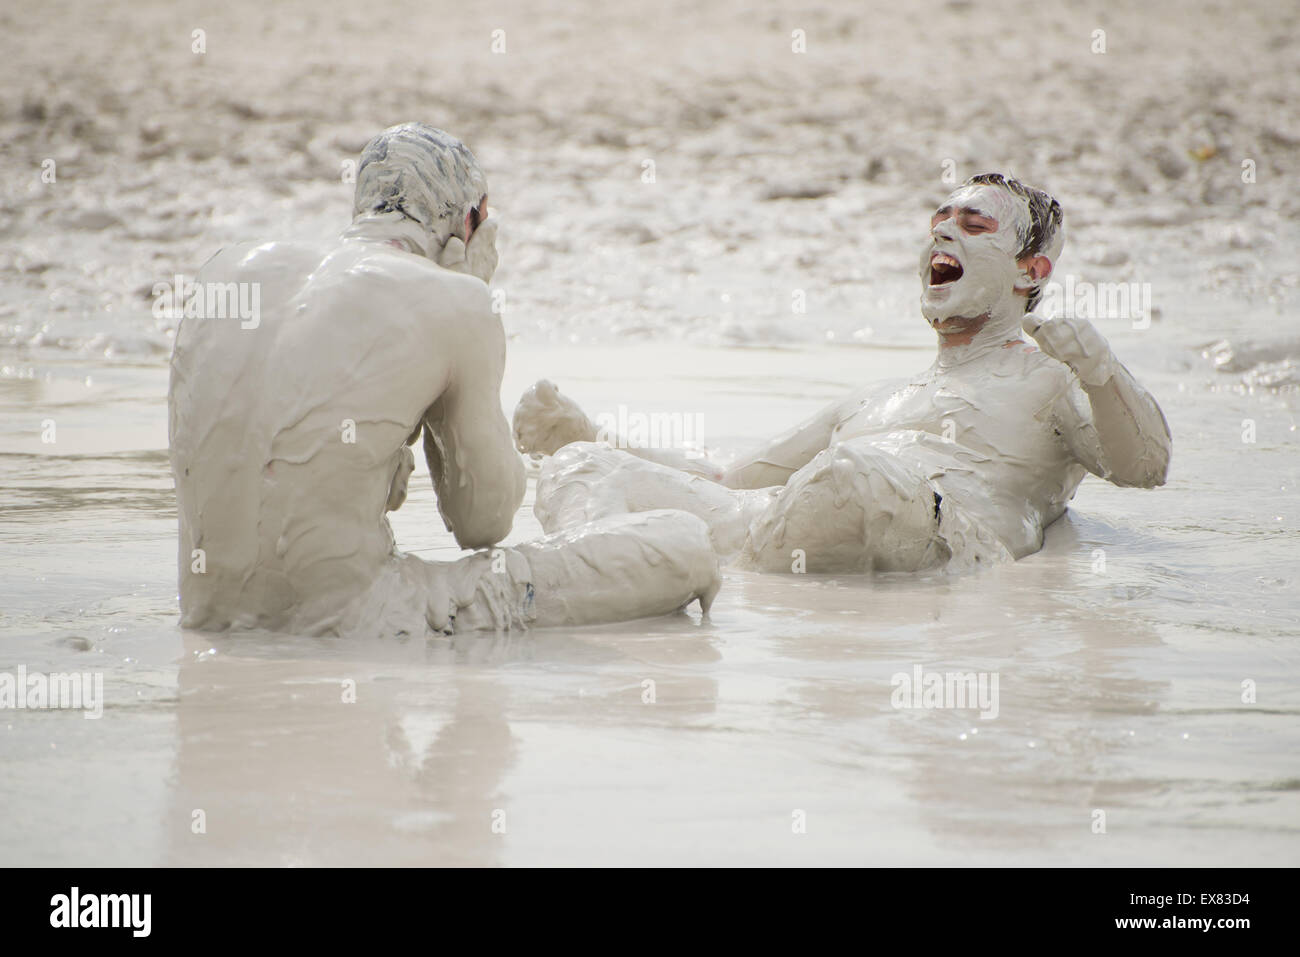 People enjoy hot weather and bathe in the mud pool with kaolin in quarry in village Jimlikov near Nova Role, Czech Republic, July 5, 2015. (CTK Photo/Martina Houdek) Stock Photo